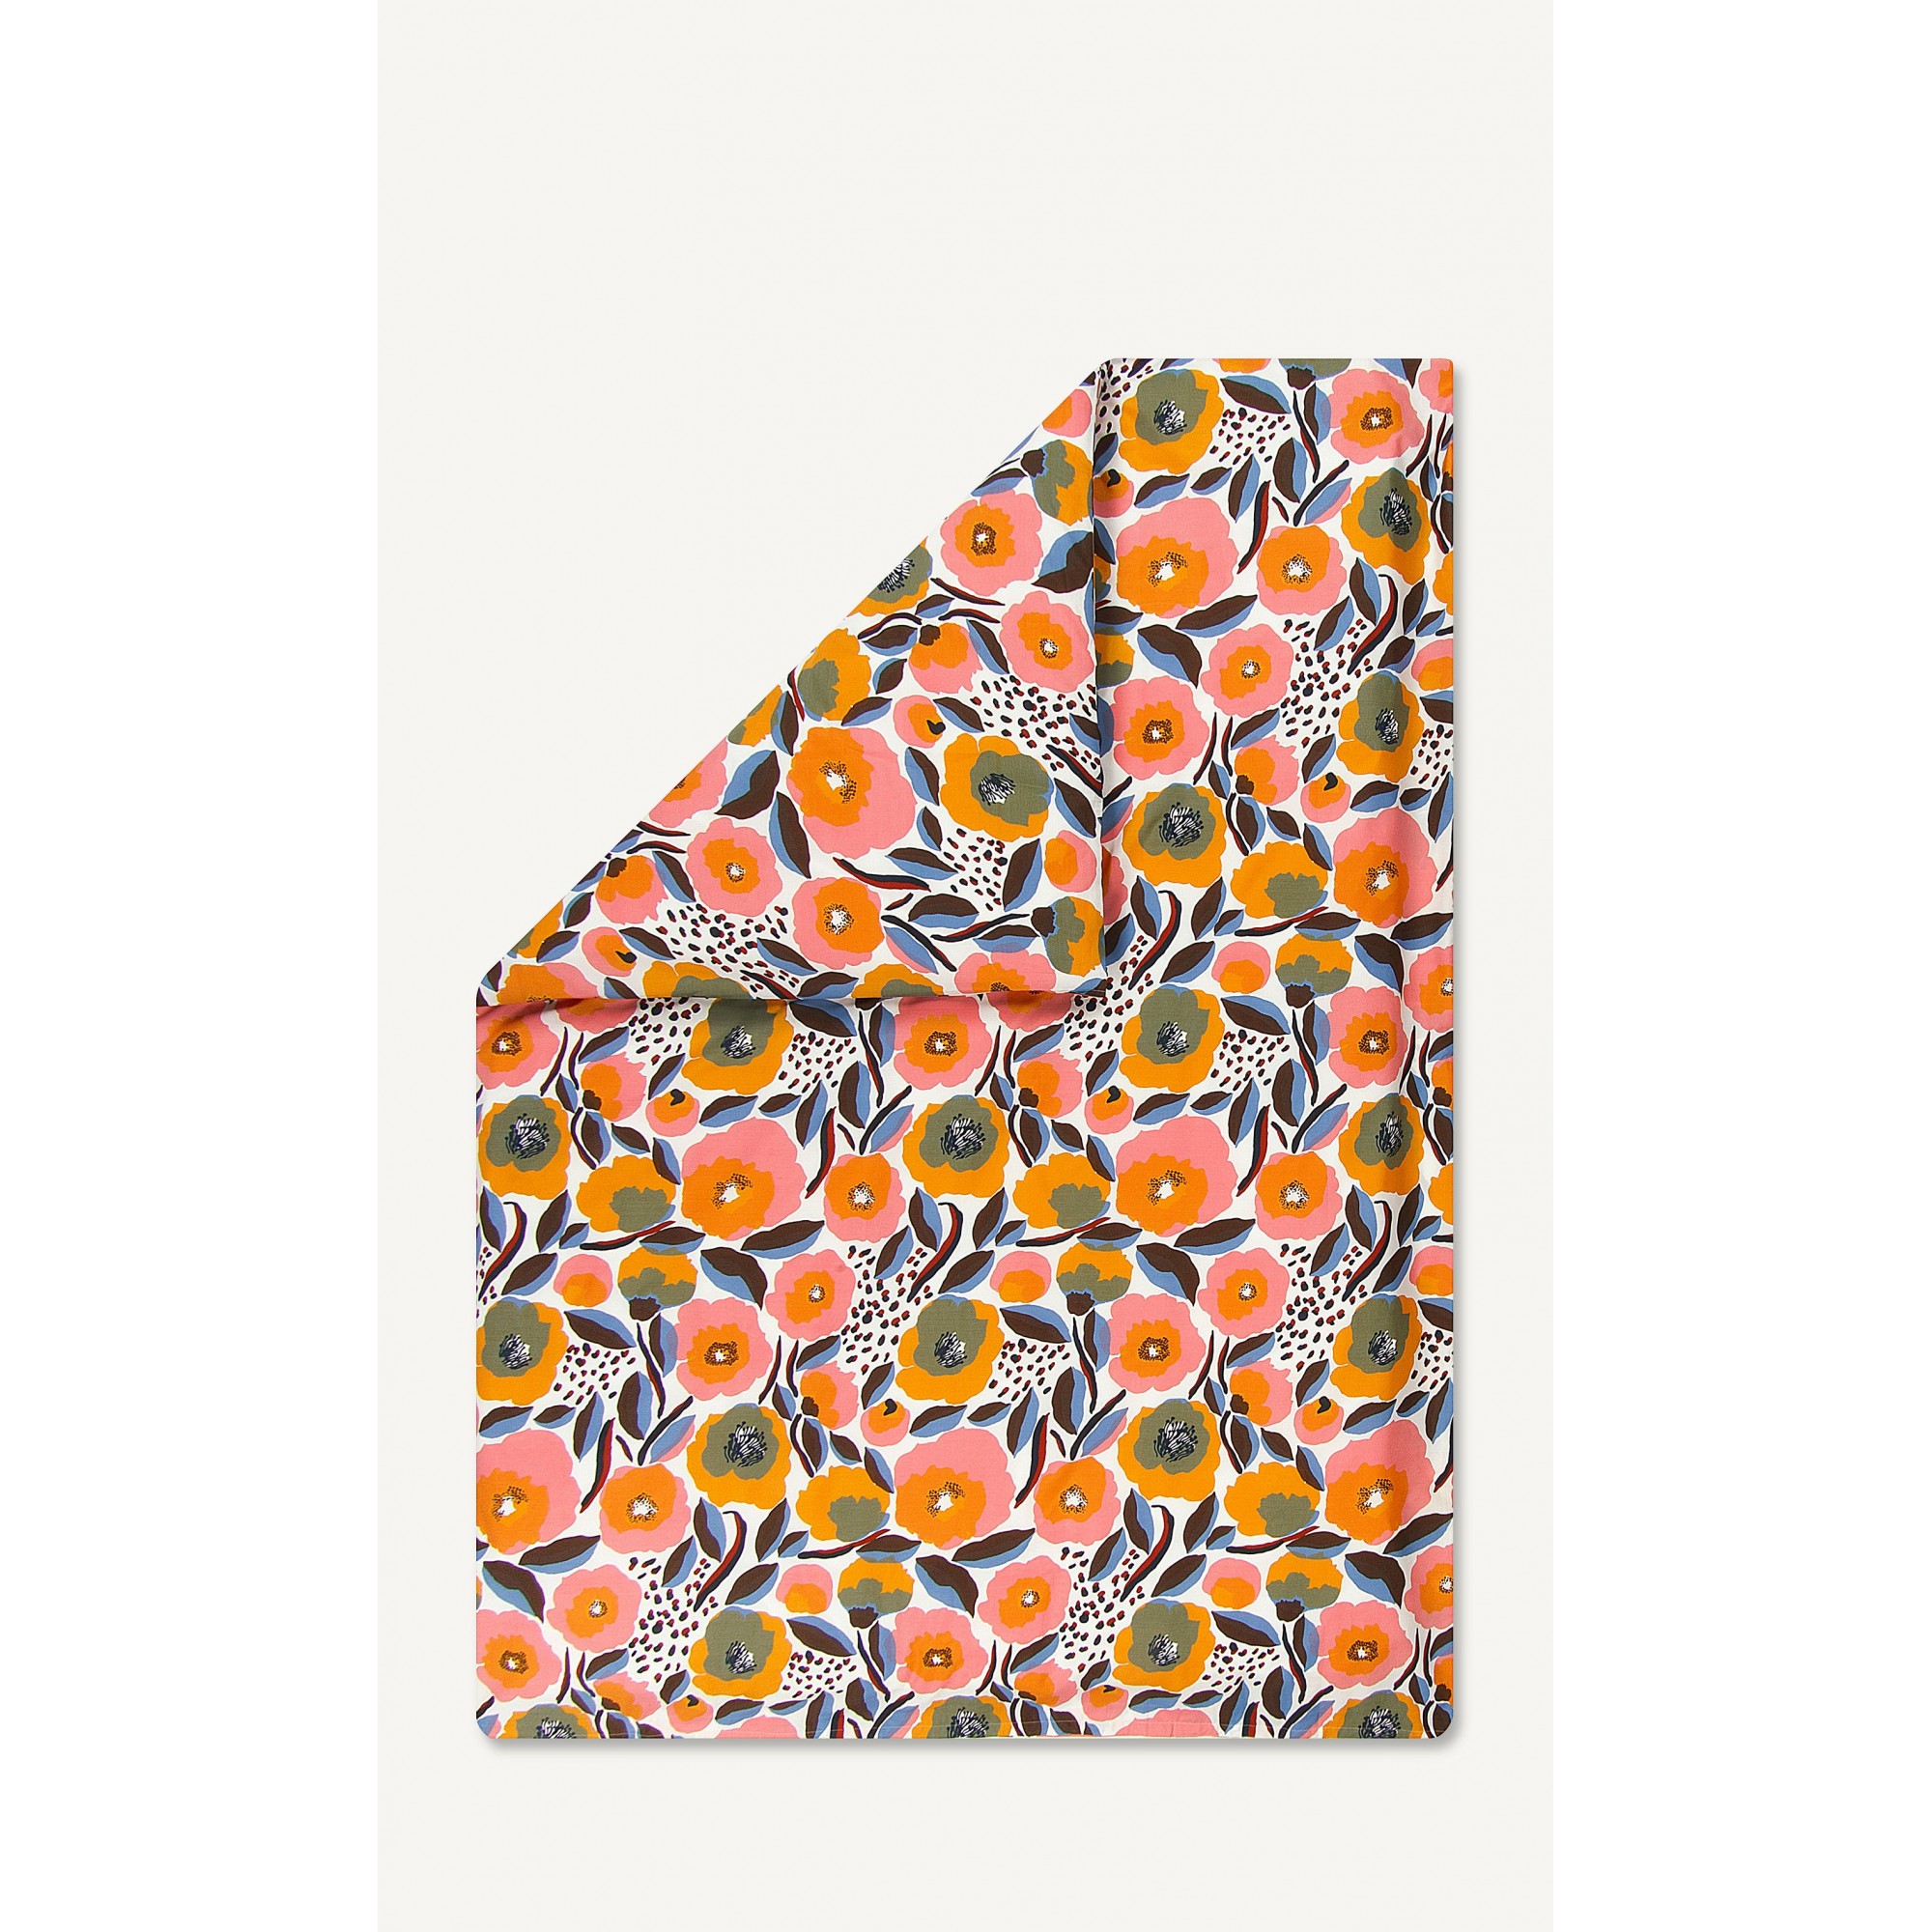 Rosarium Duvet Cover For Two Marimekko Textiles Deco Design Finnova